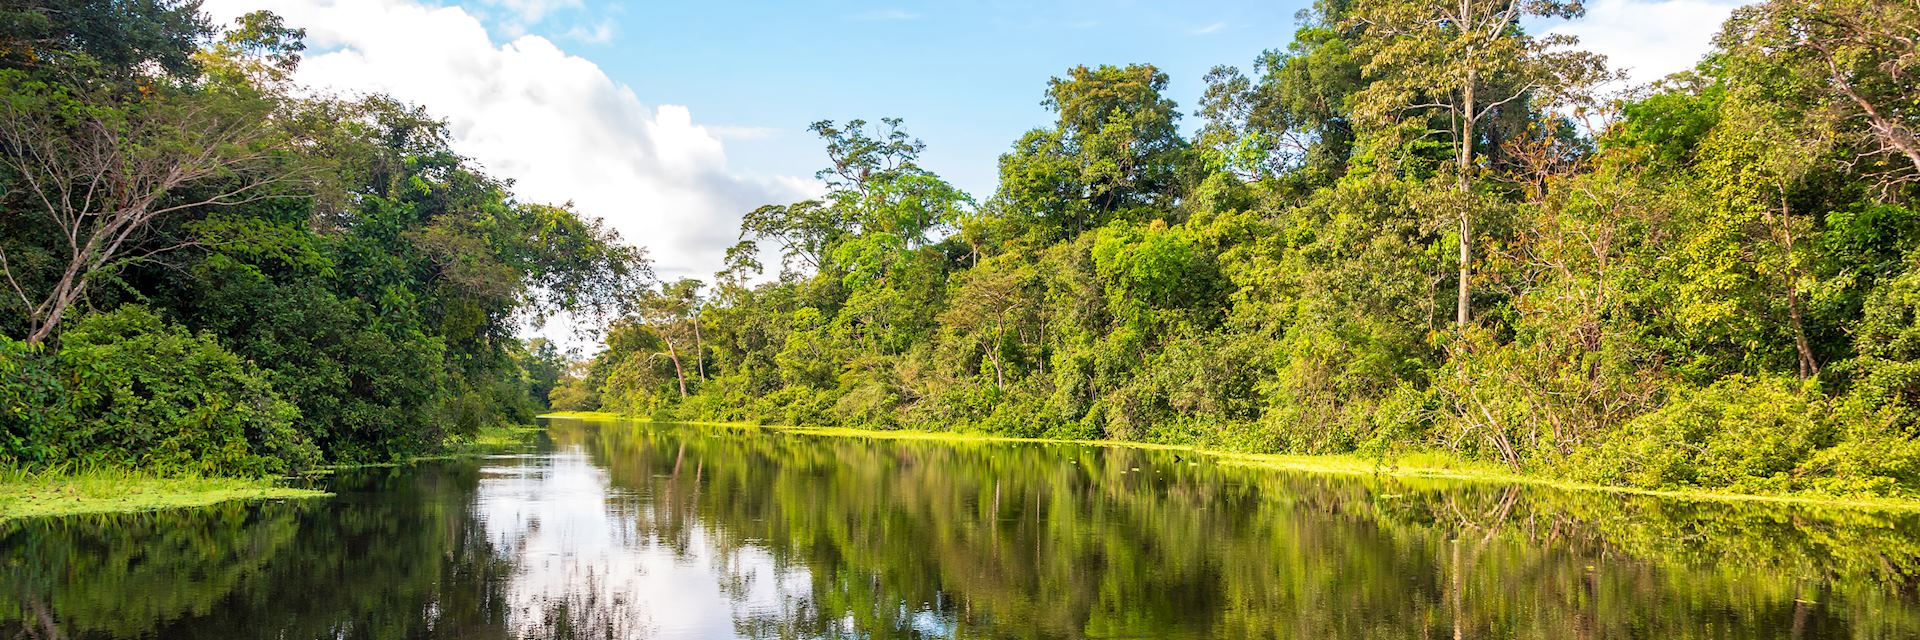 The Peruvian Amazon